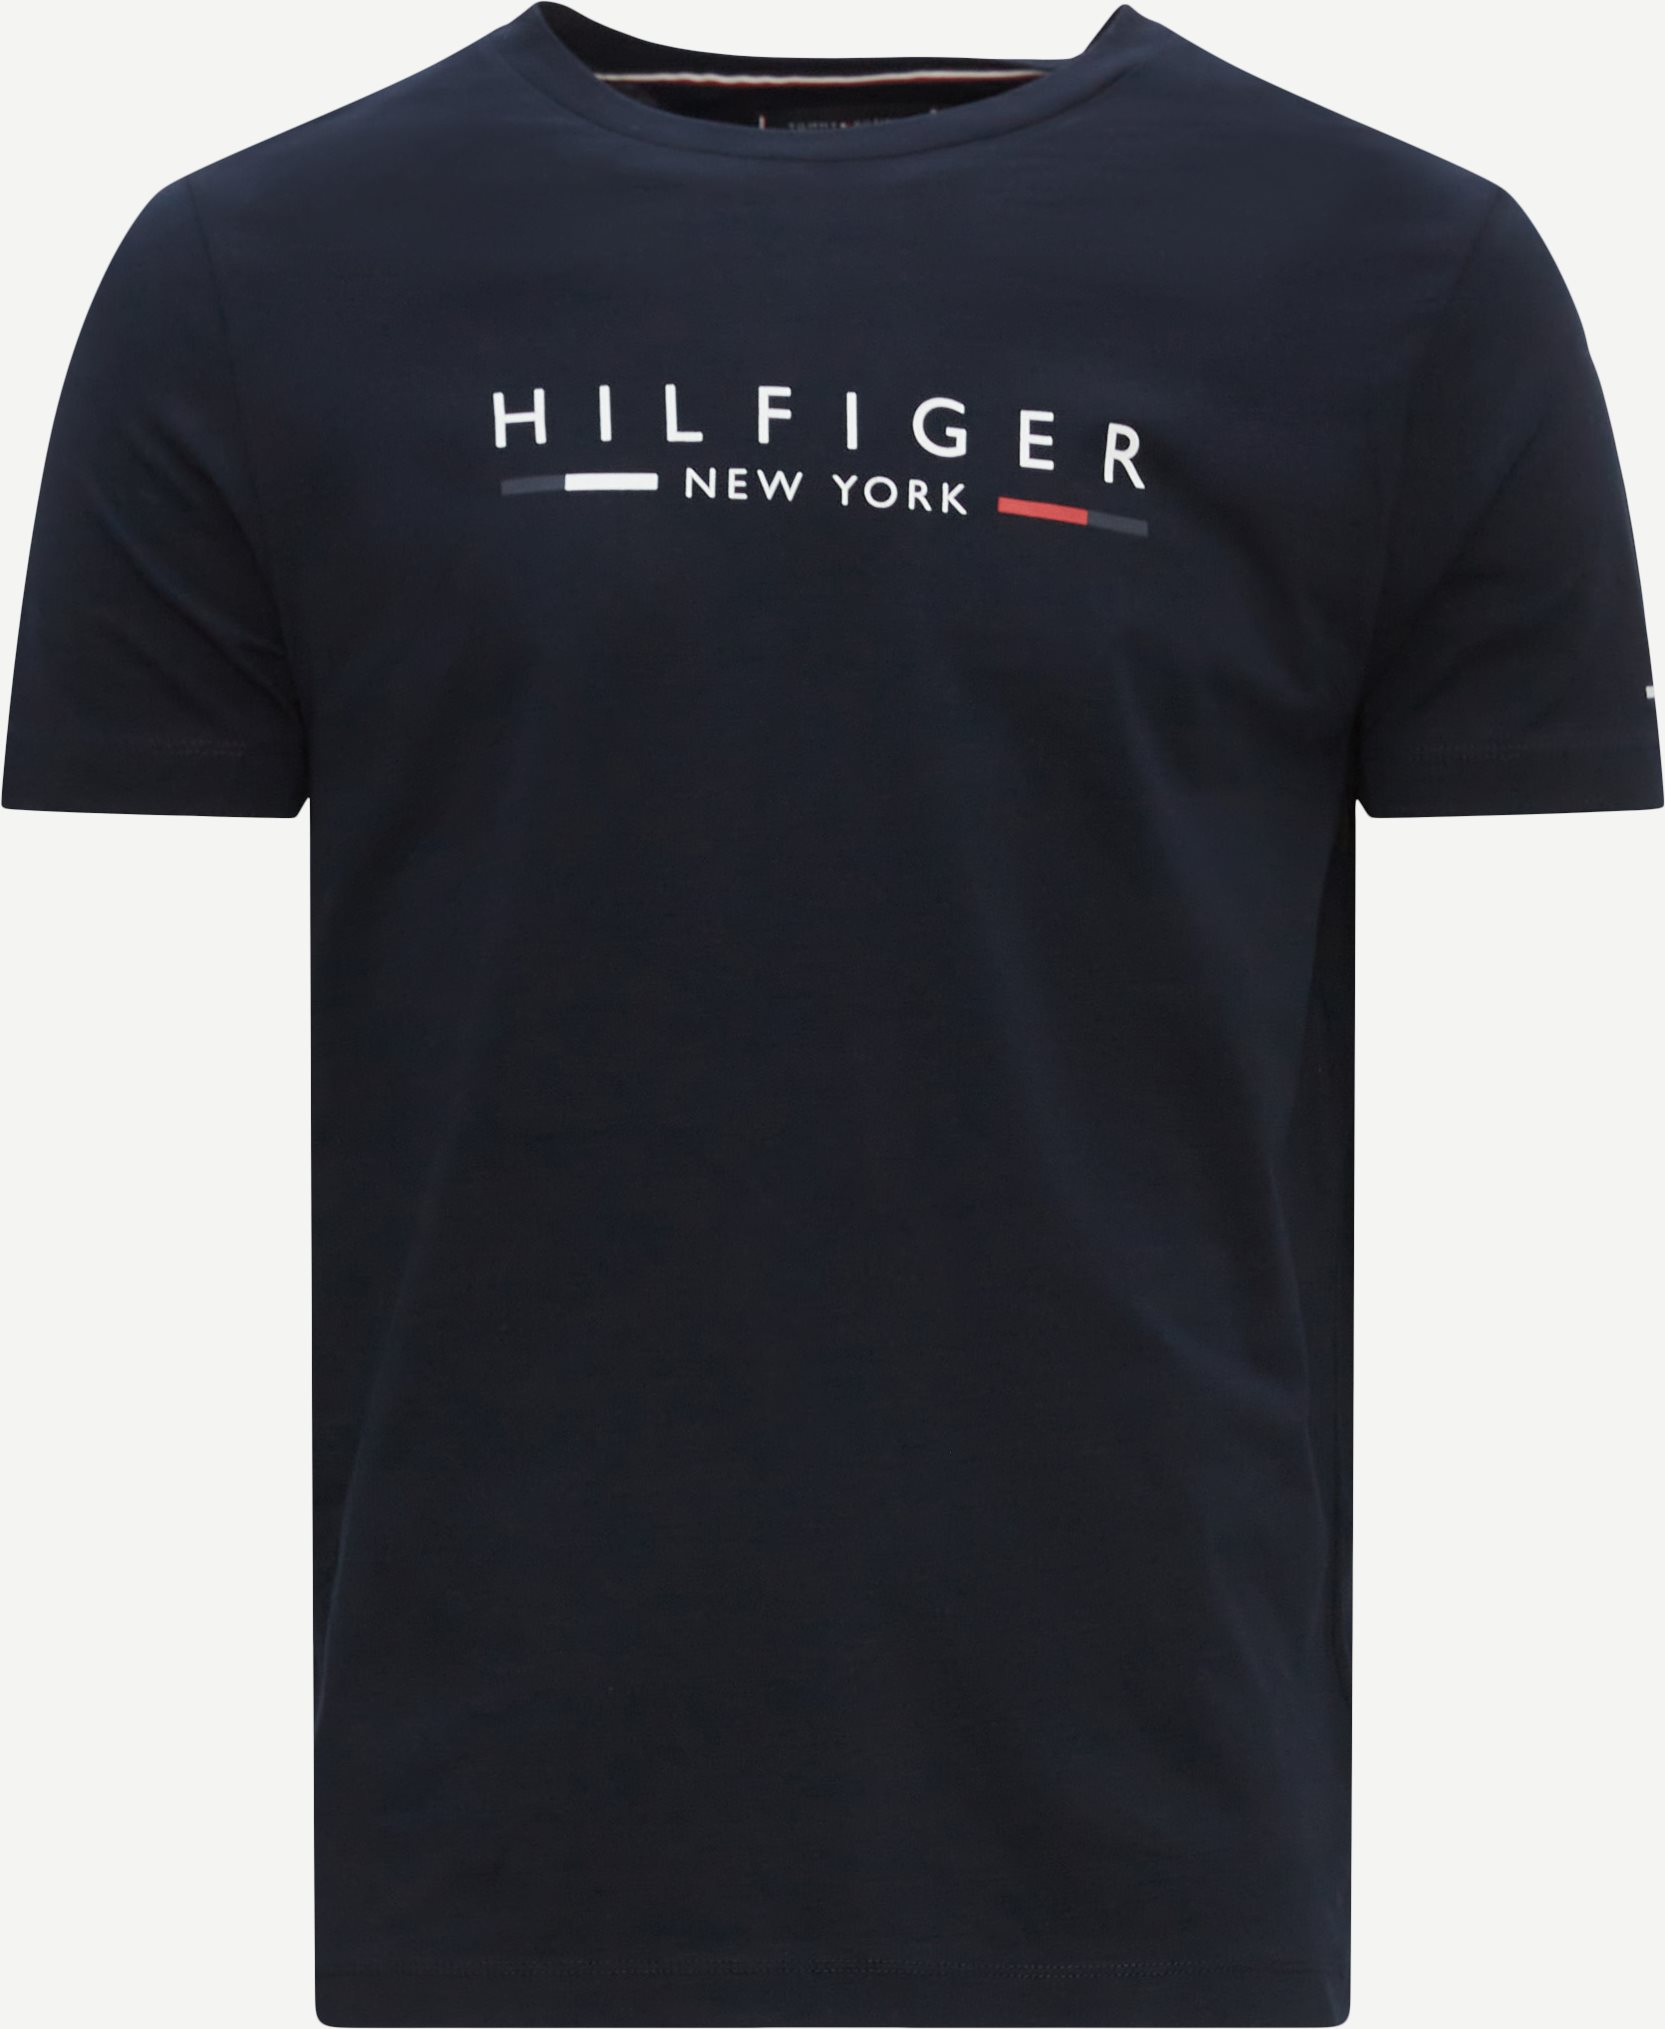 Tommy Hilfiger T-shirts 29372 HILFIGER NEW YORK TEE Blue